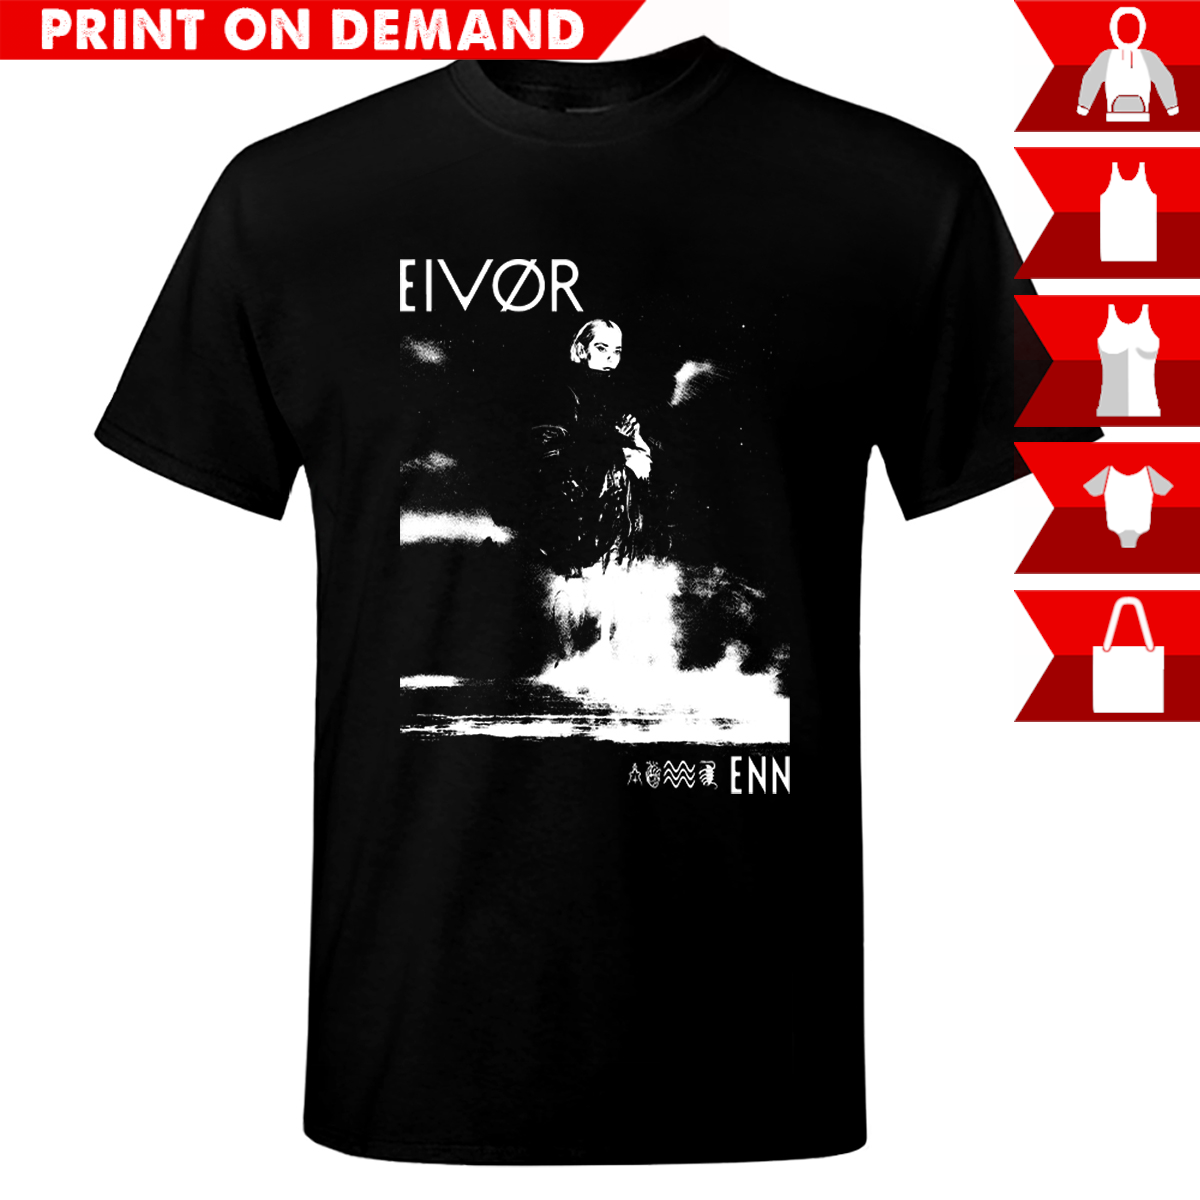 Eivor - Cover - Print on demand